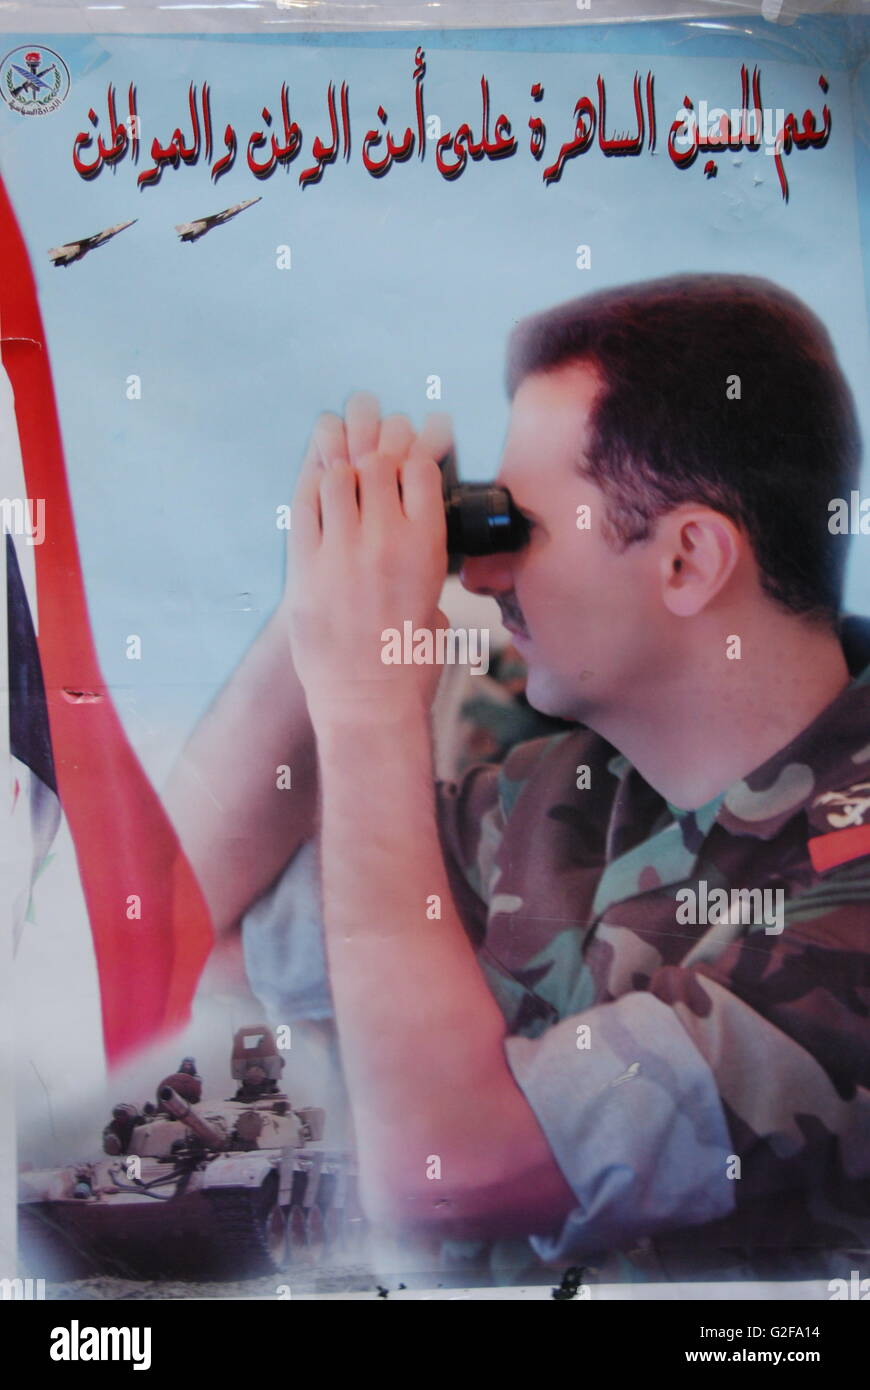 Damascus - President Bashar al-Assad Propaganda Poster Stock Photo